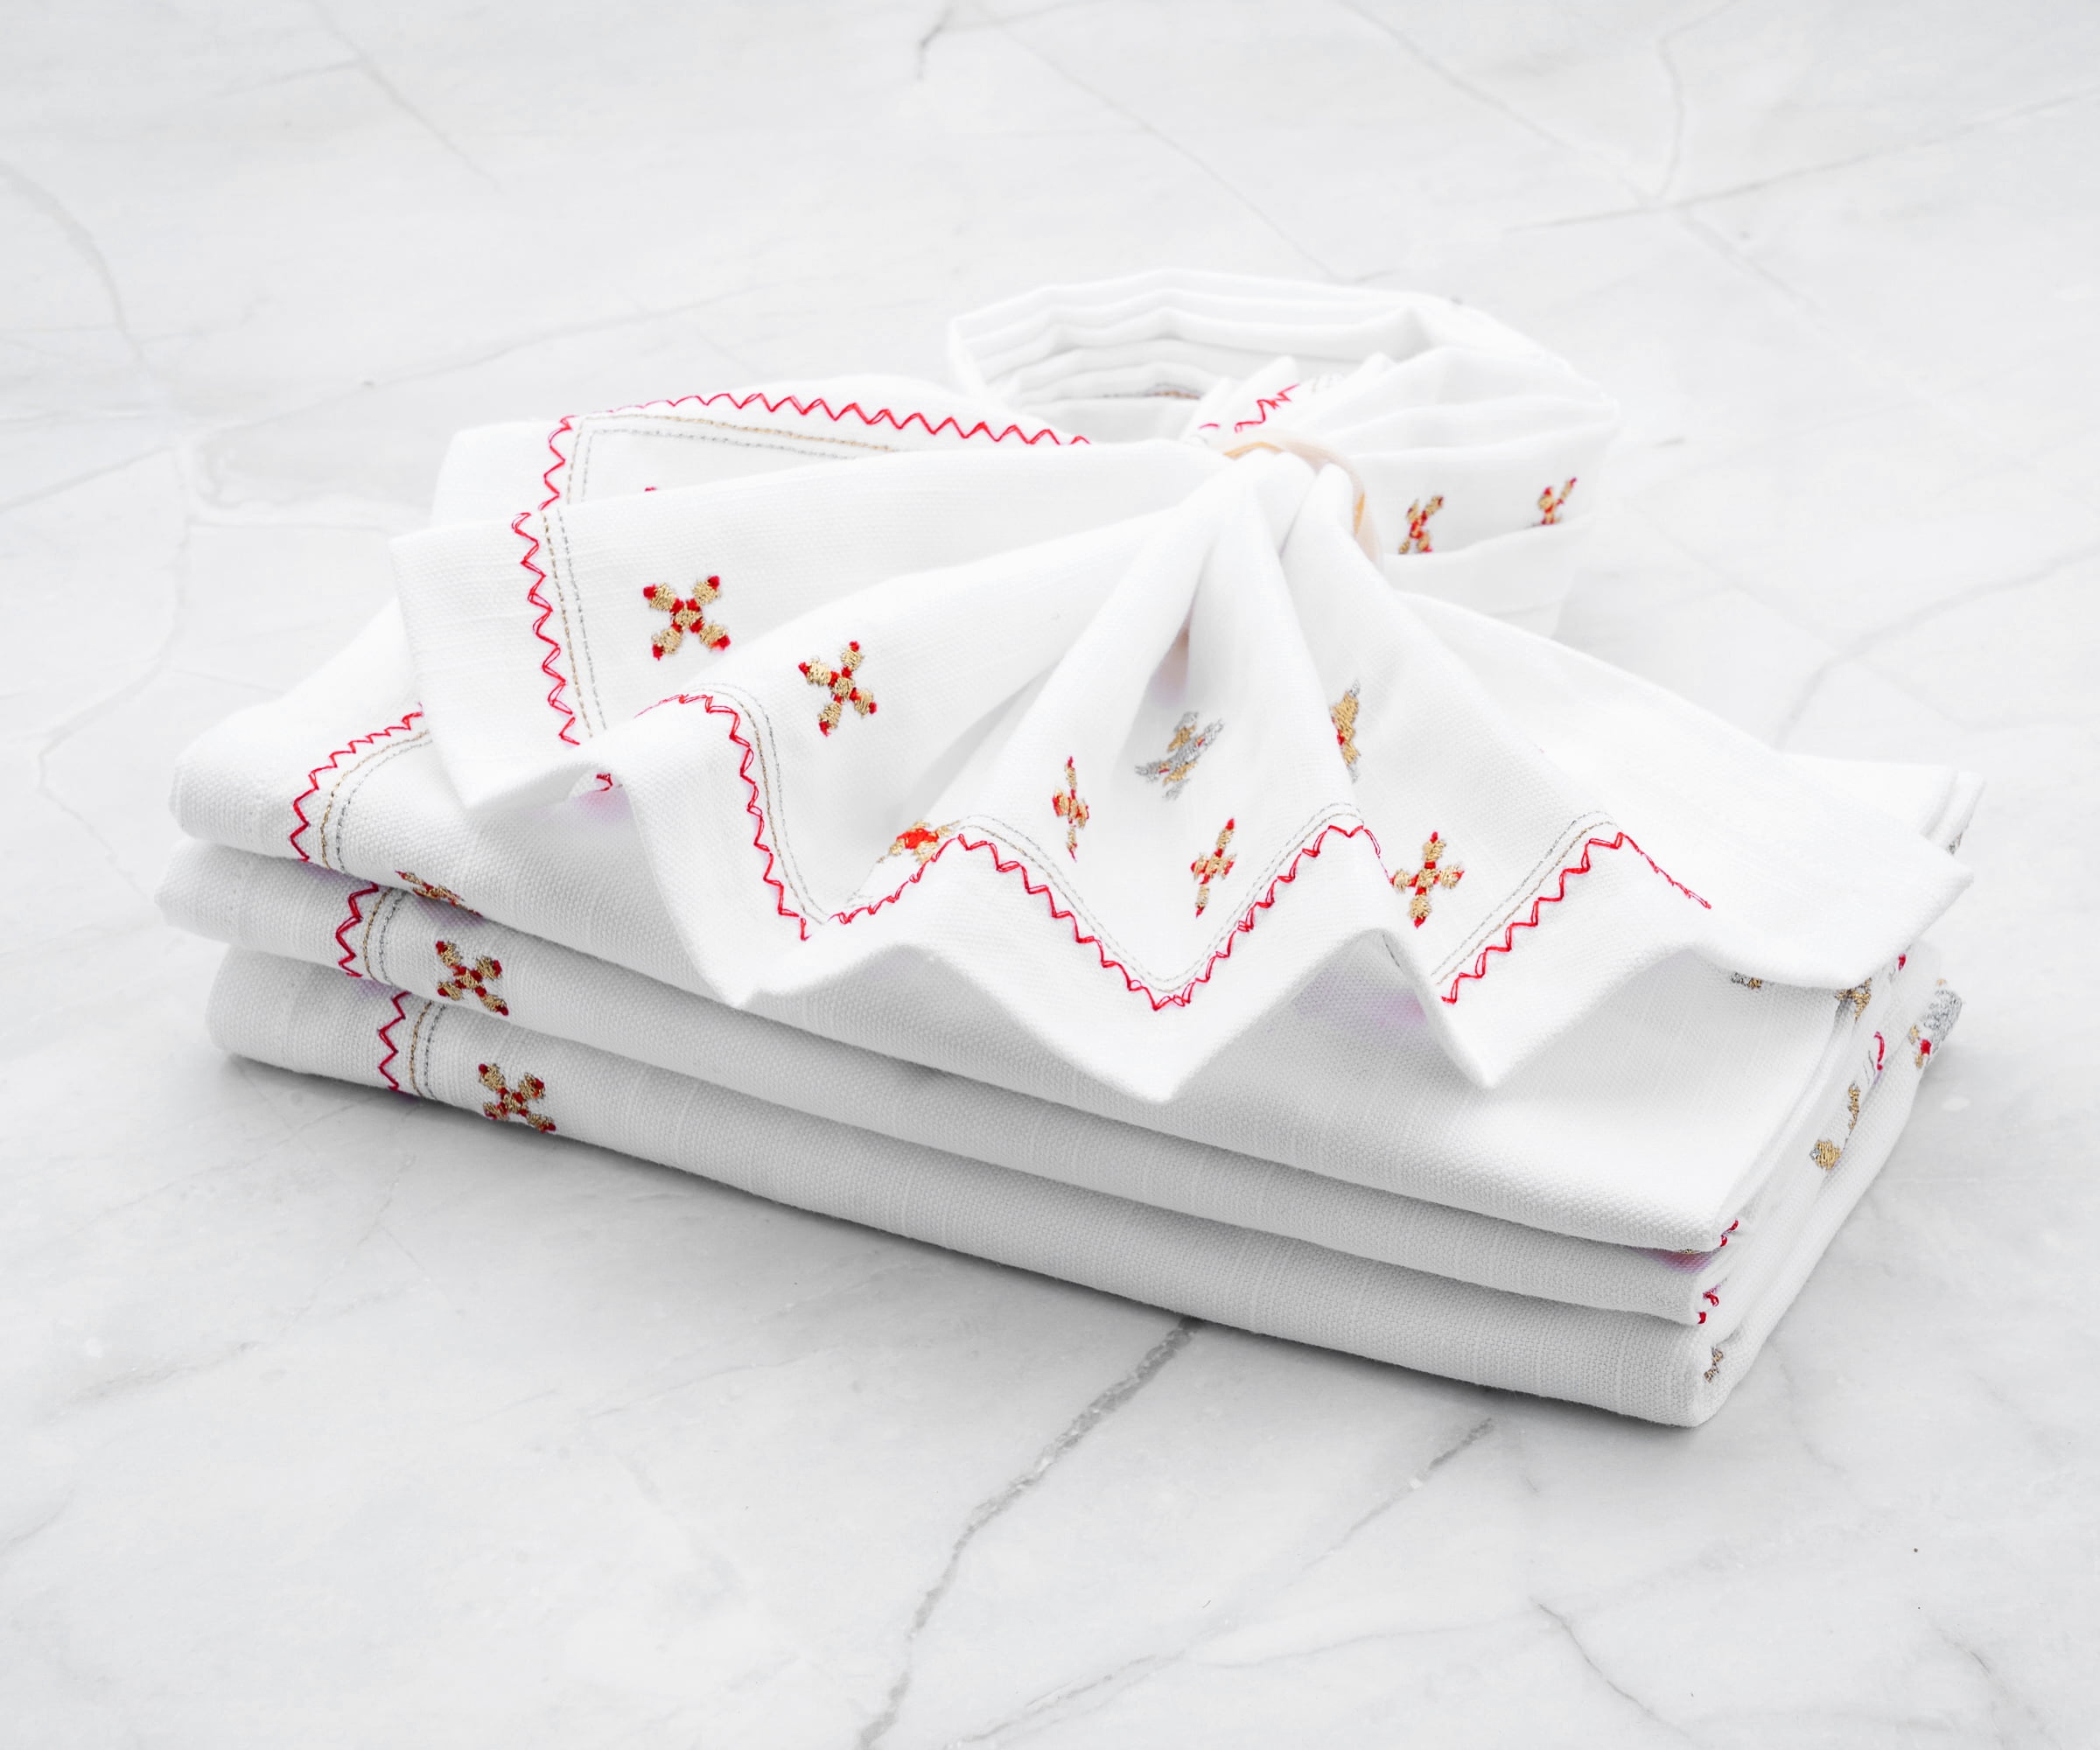 Kukinta Linen Napkins Set of 12, Versatile 17x17 Inches Handmade Cotton Cloth Napkins, Dinner Table Cloth Napkins for Wedding, Christmas and Parties